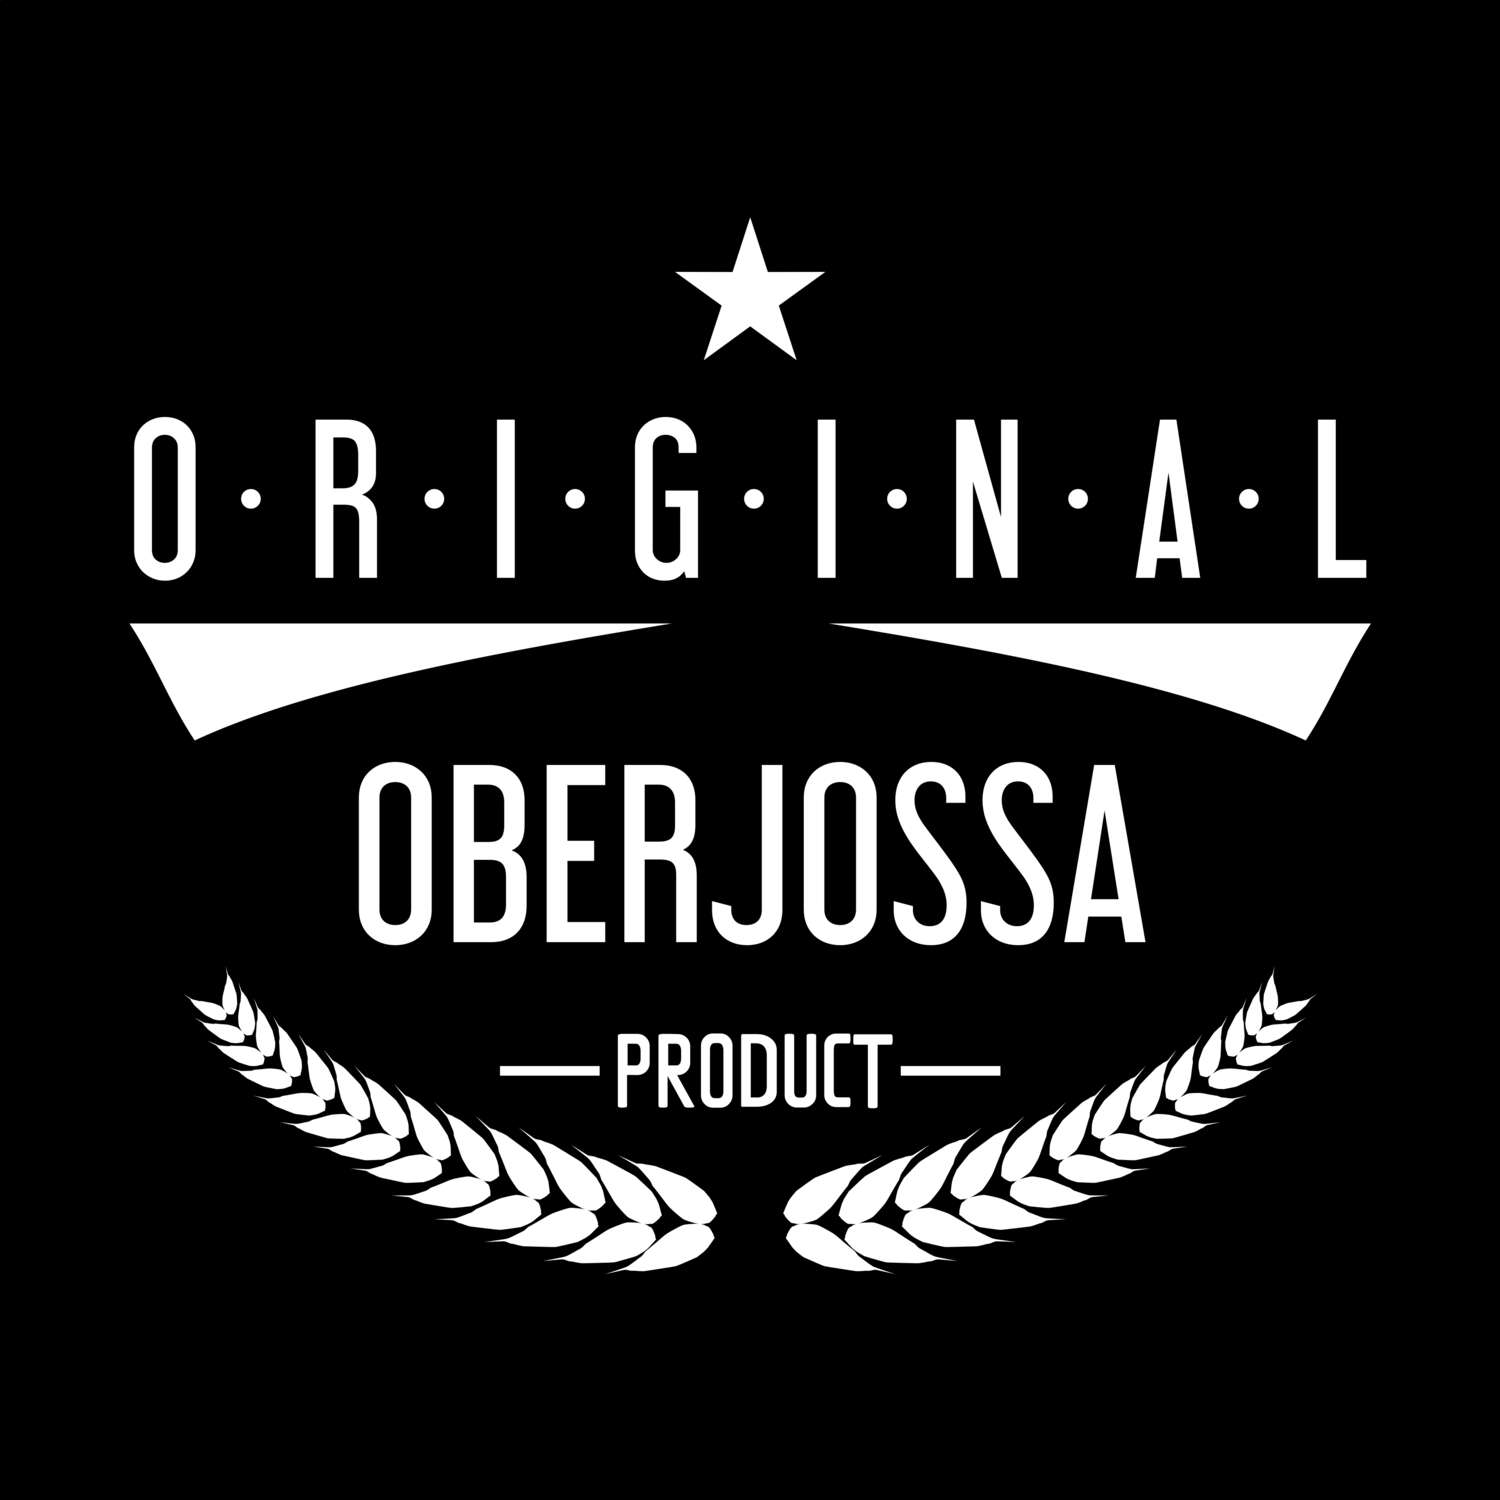 Oberjossa T-Shirt »Original Product«